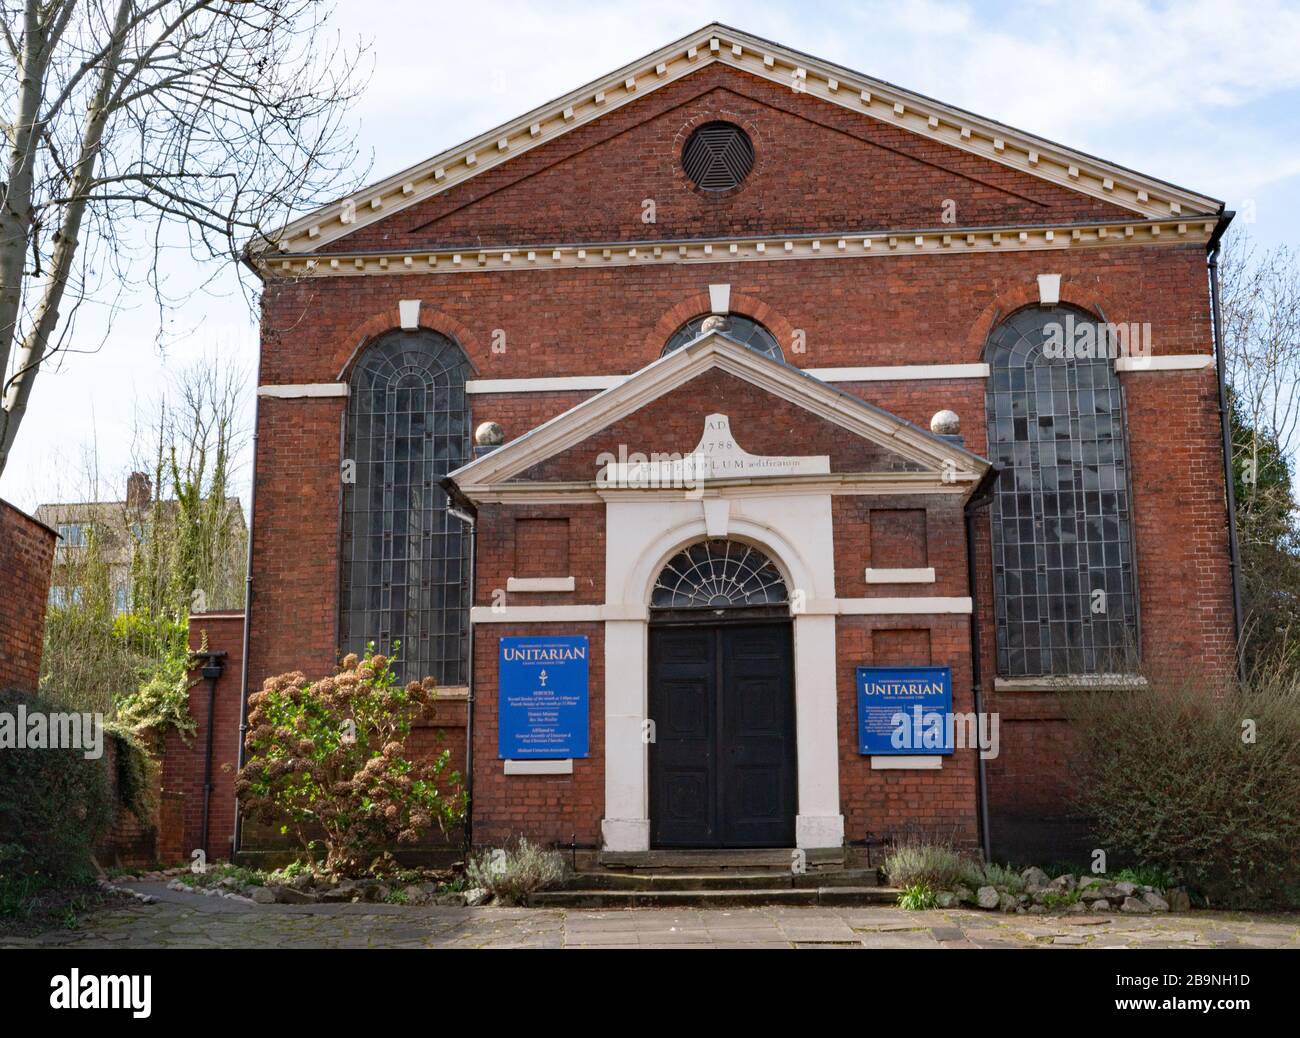 Unitarian Church building. Stourbridge, West Midlands. Stock Photo